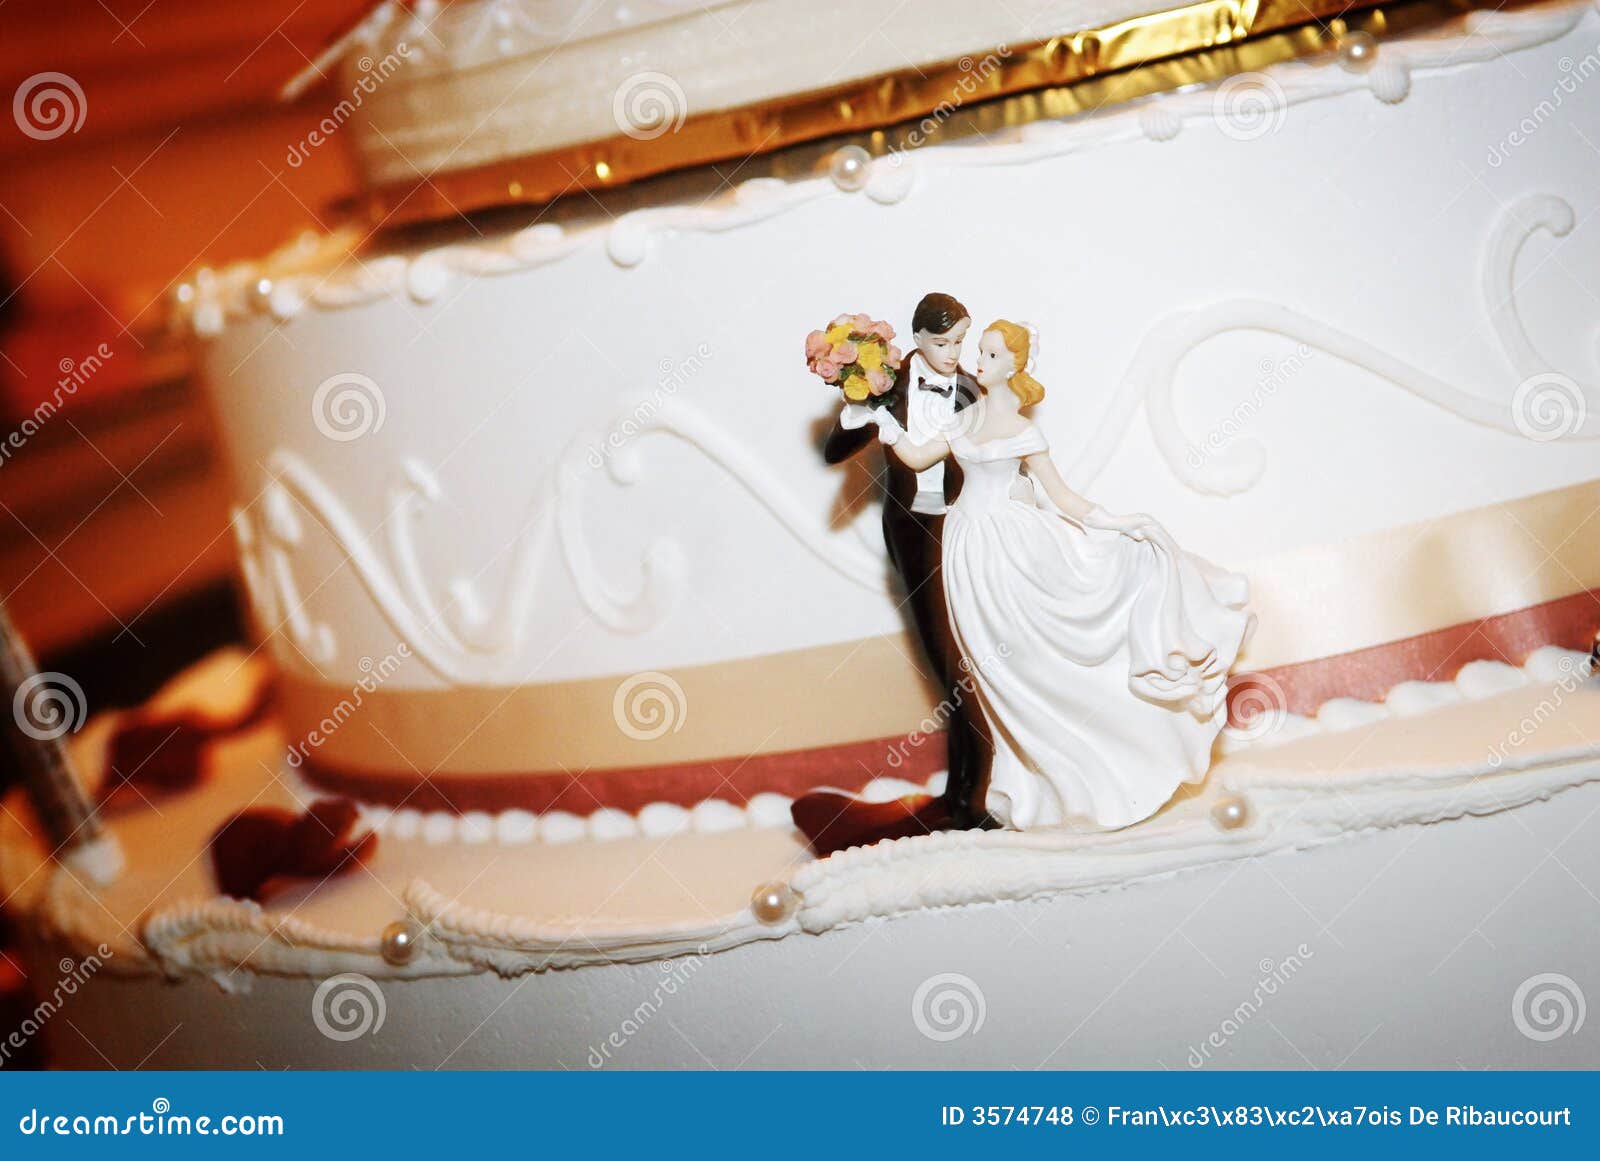 Bride & Groom on Wedding Cake Stock Photo - Image of detail, dessert ...